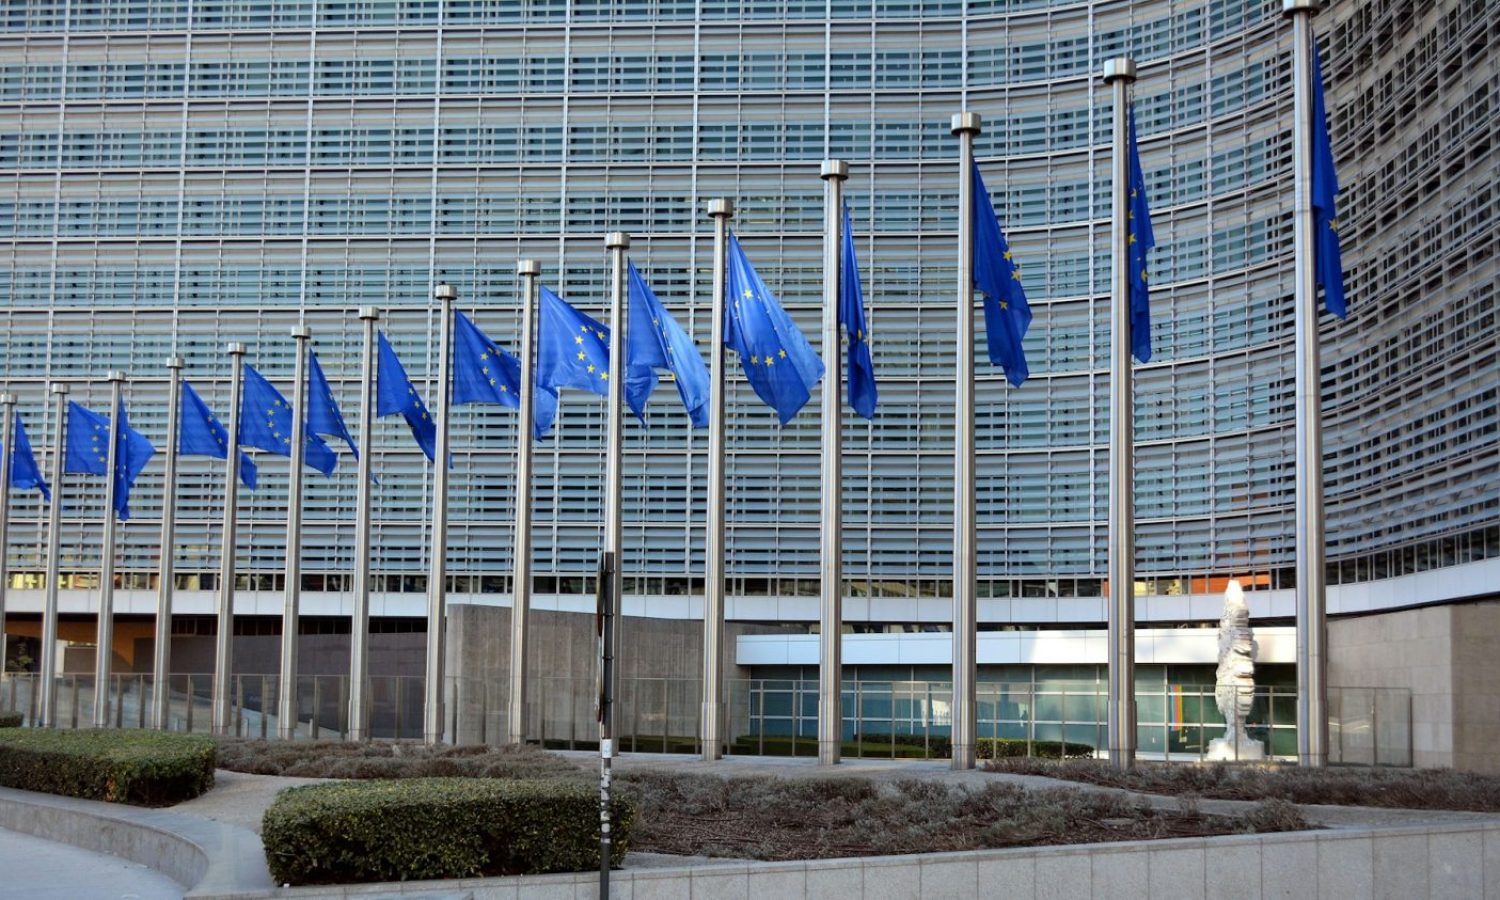 EU Parliament by Carl Campbell